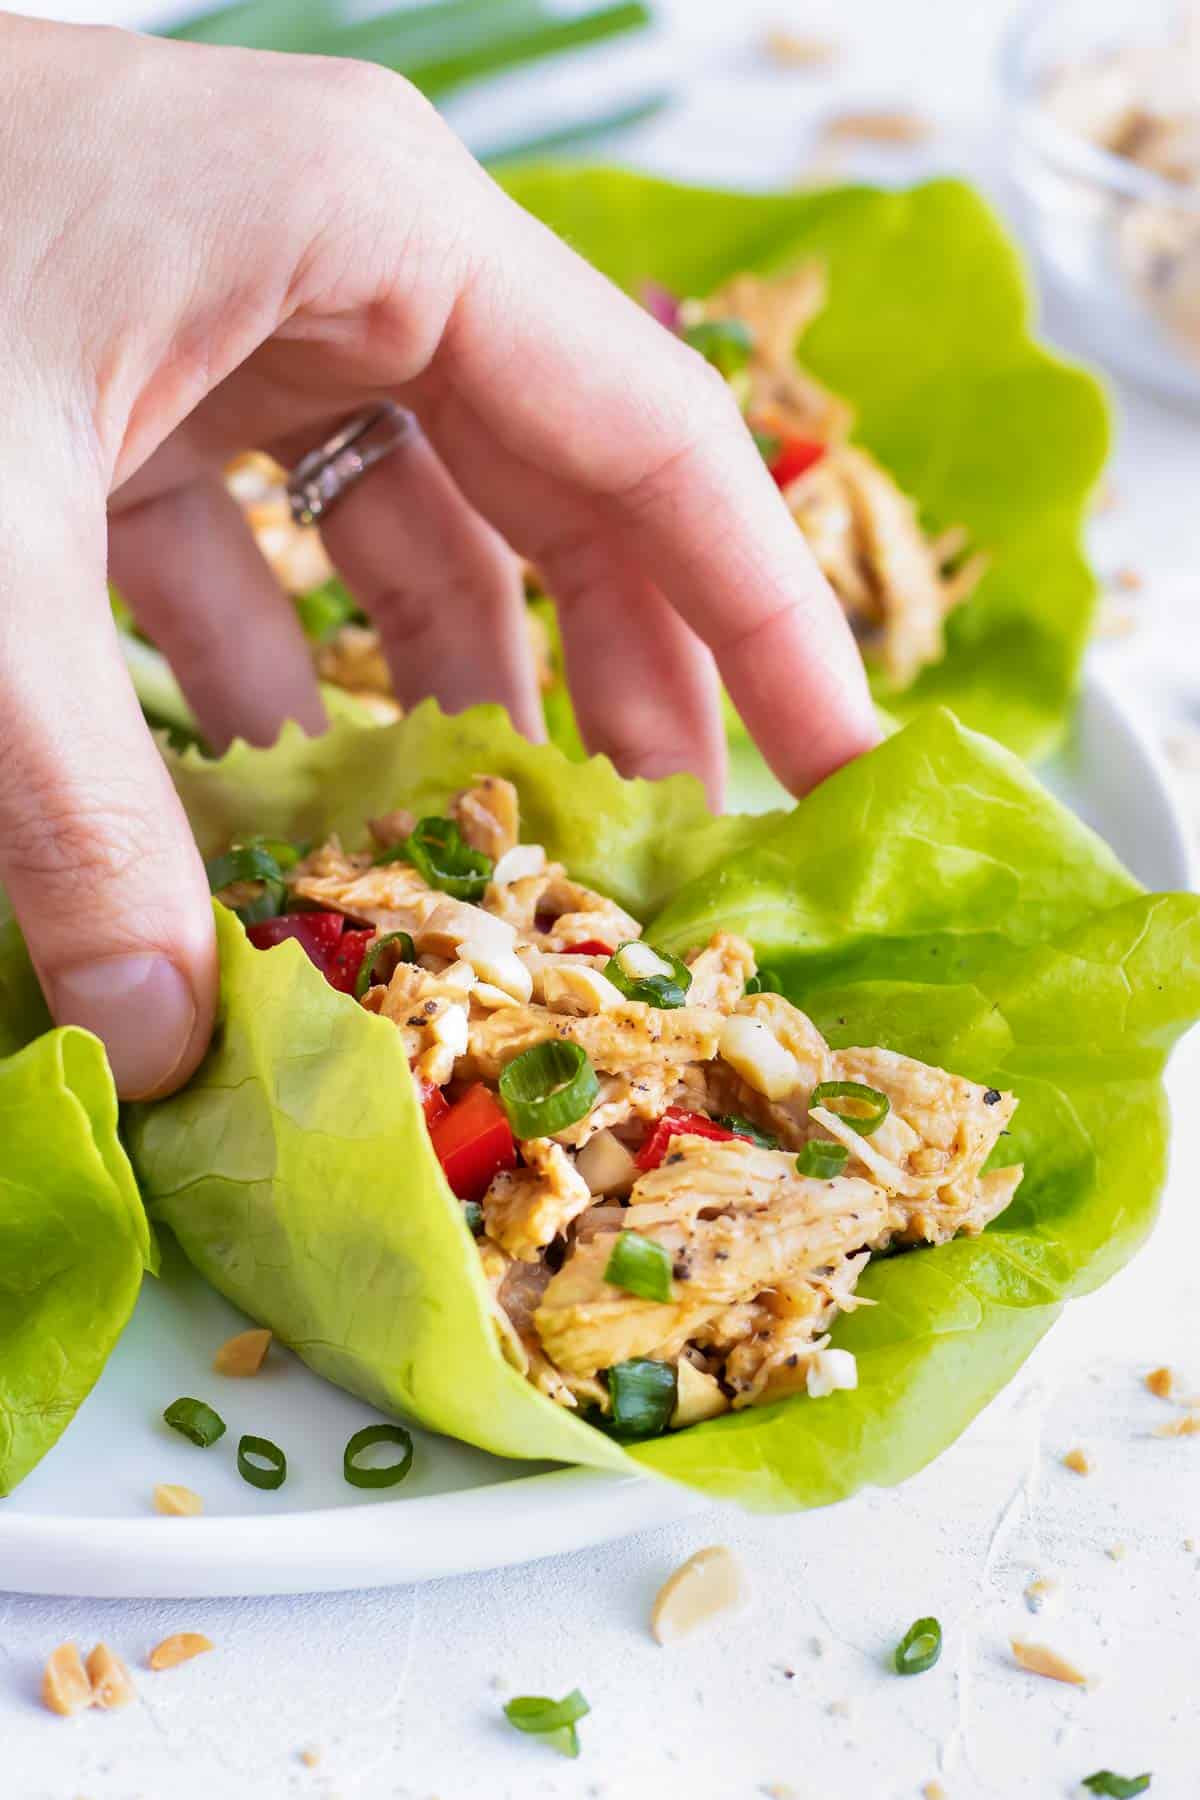 Asian Chicken Salad Lettuce Wraps